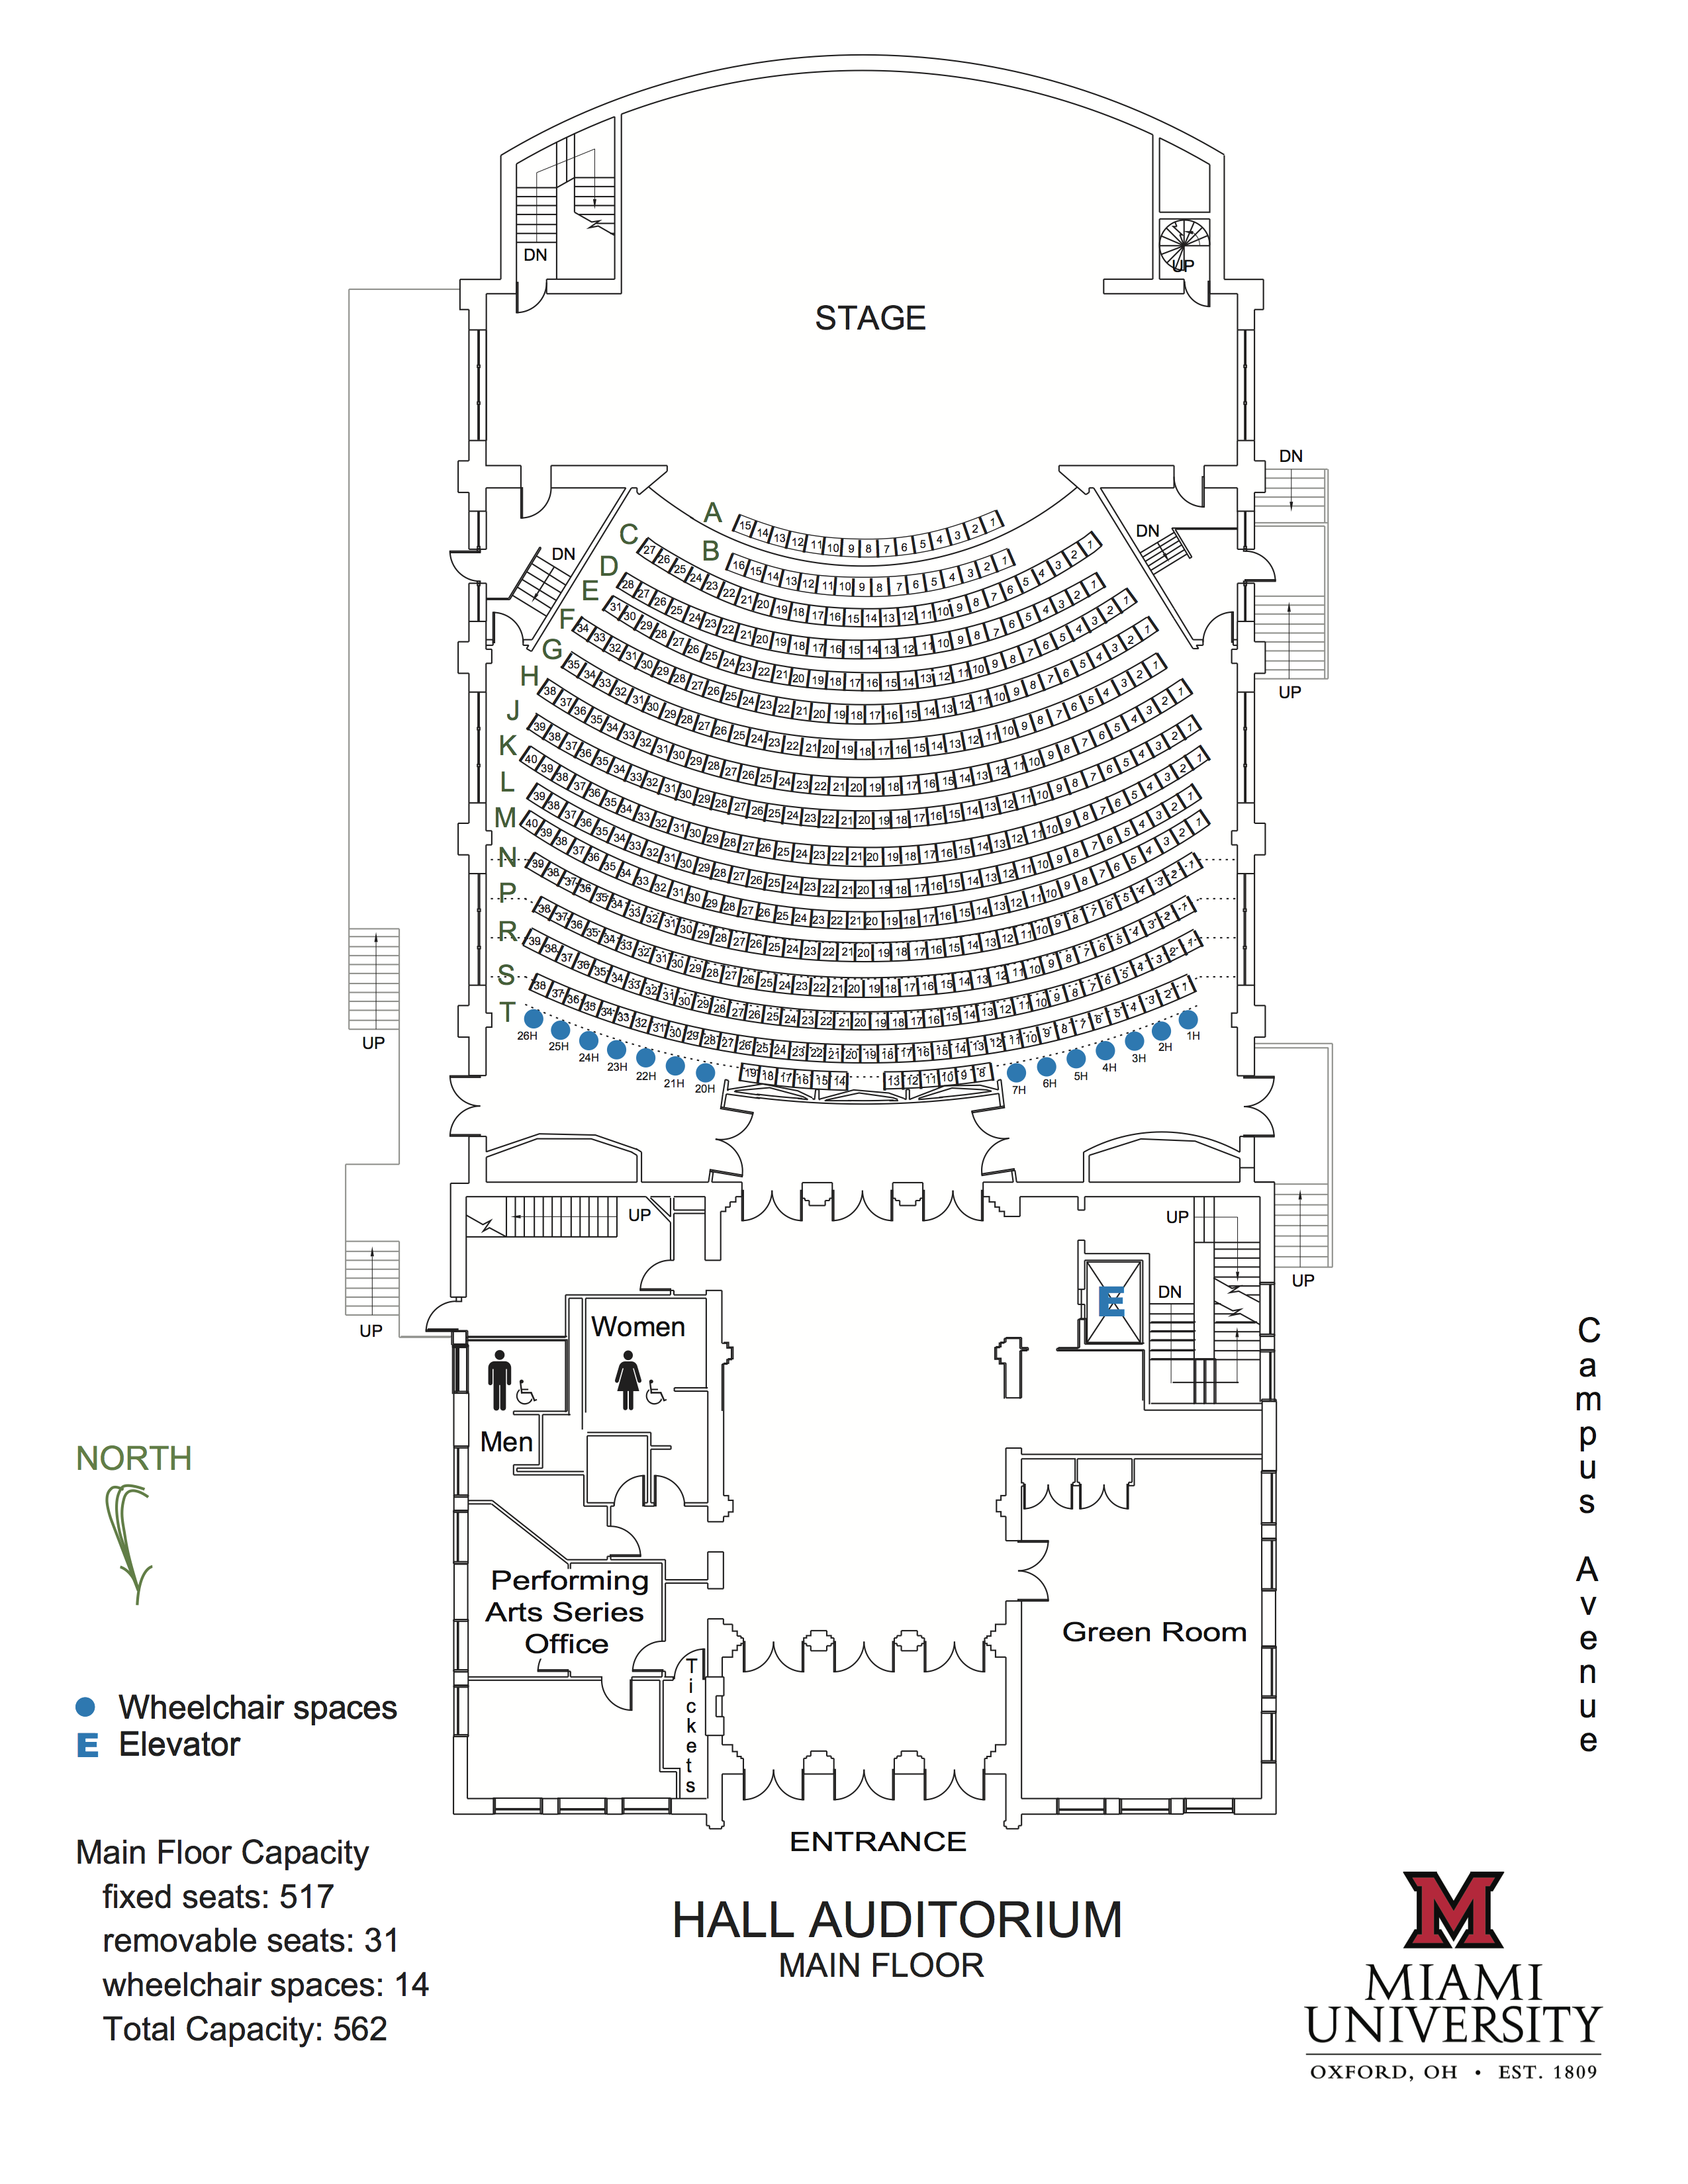 John M Hall Auditorium Seating Chart